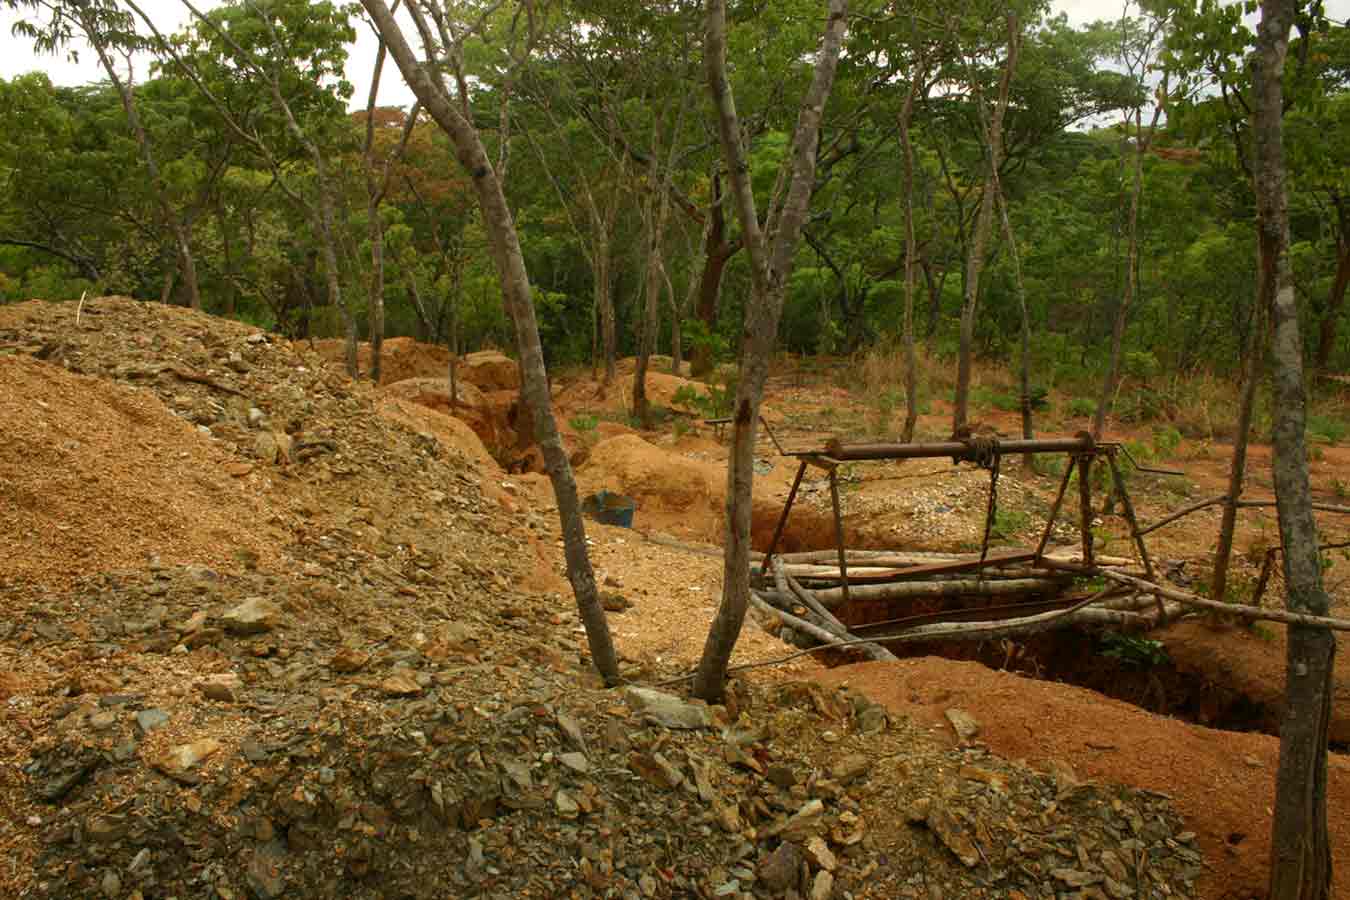 Soil disturbance after gold mining activities